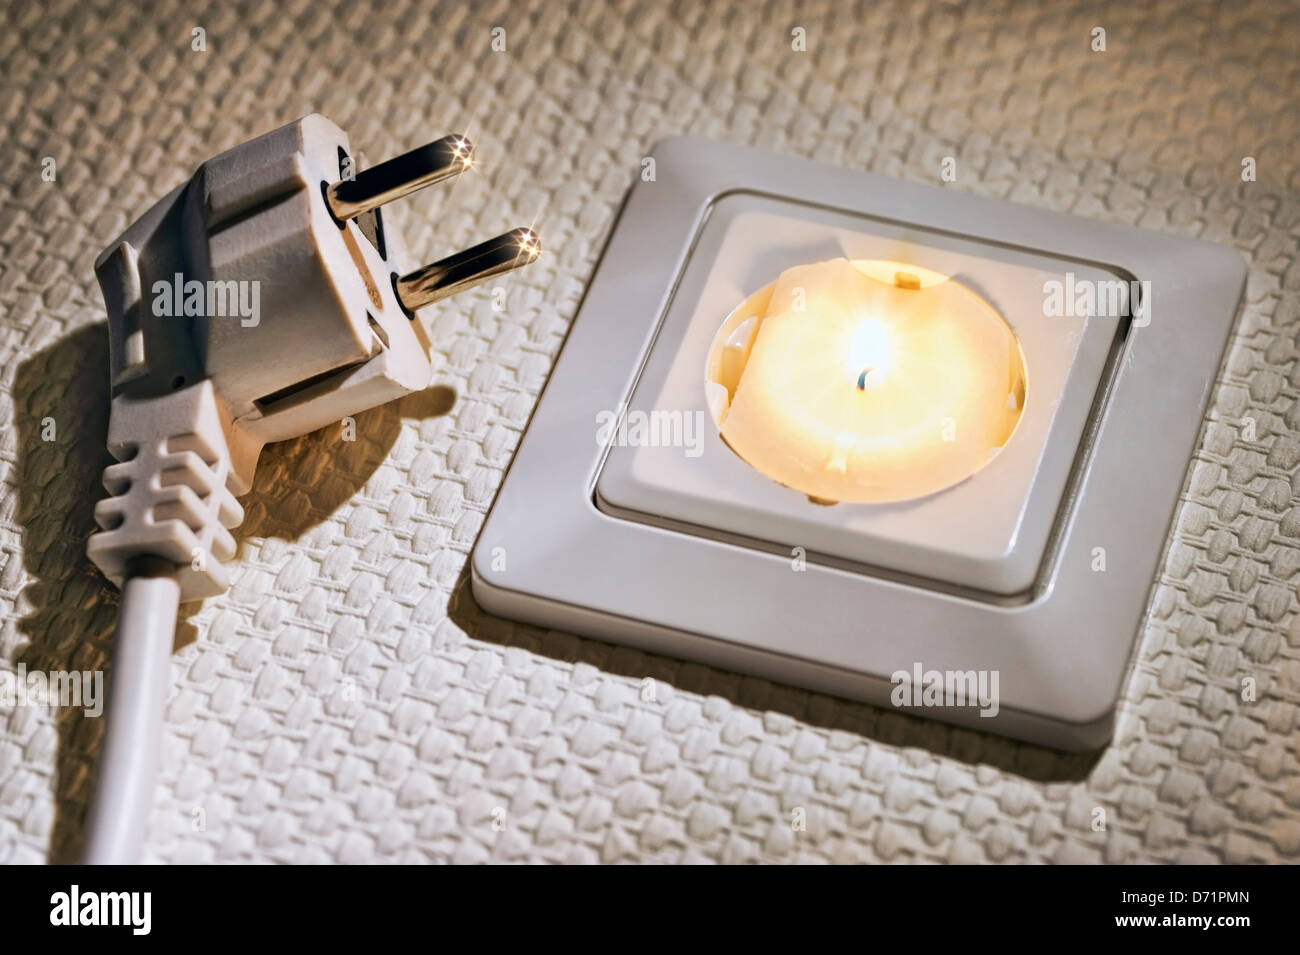 Outlet with burning candle, symbolic photo stream failure, blackout Stock Photo